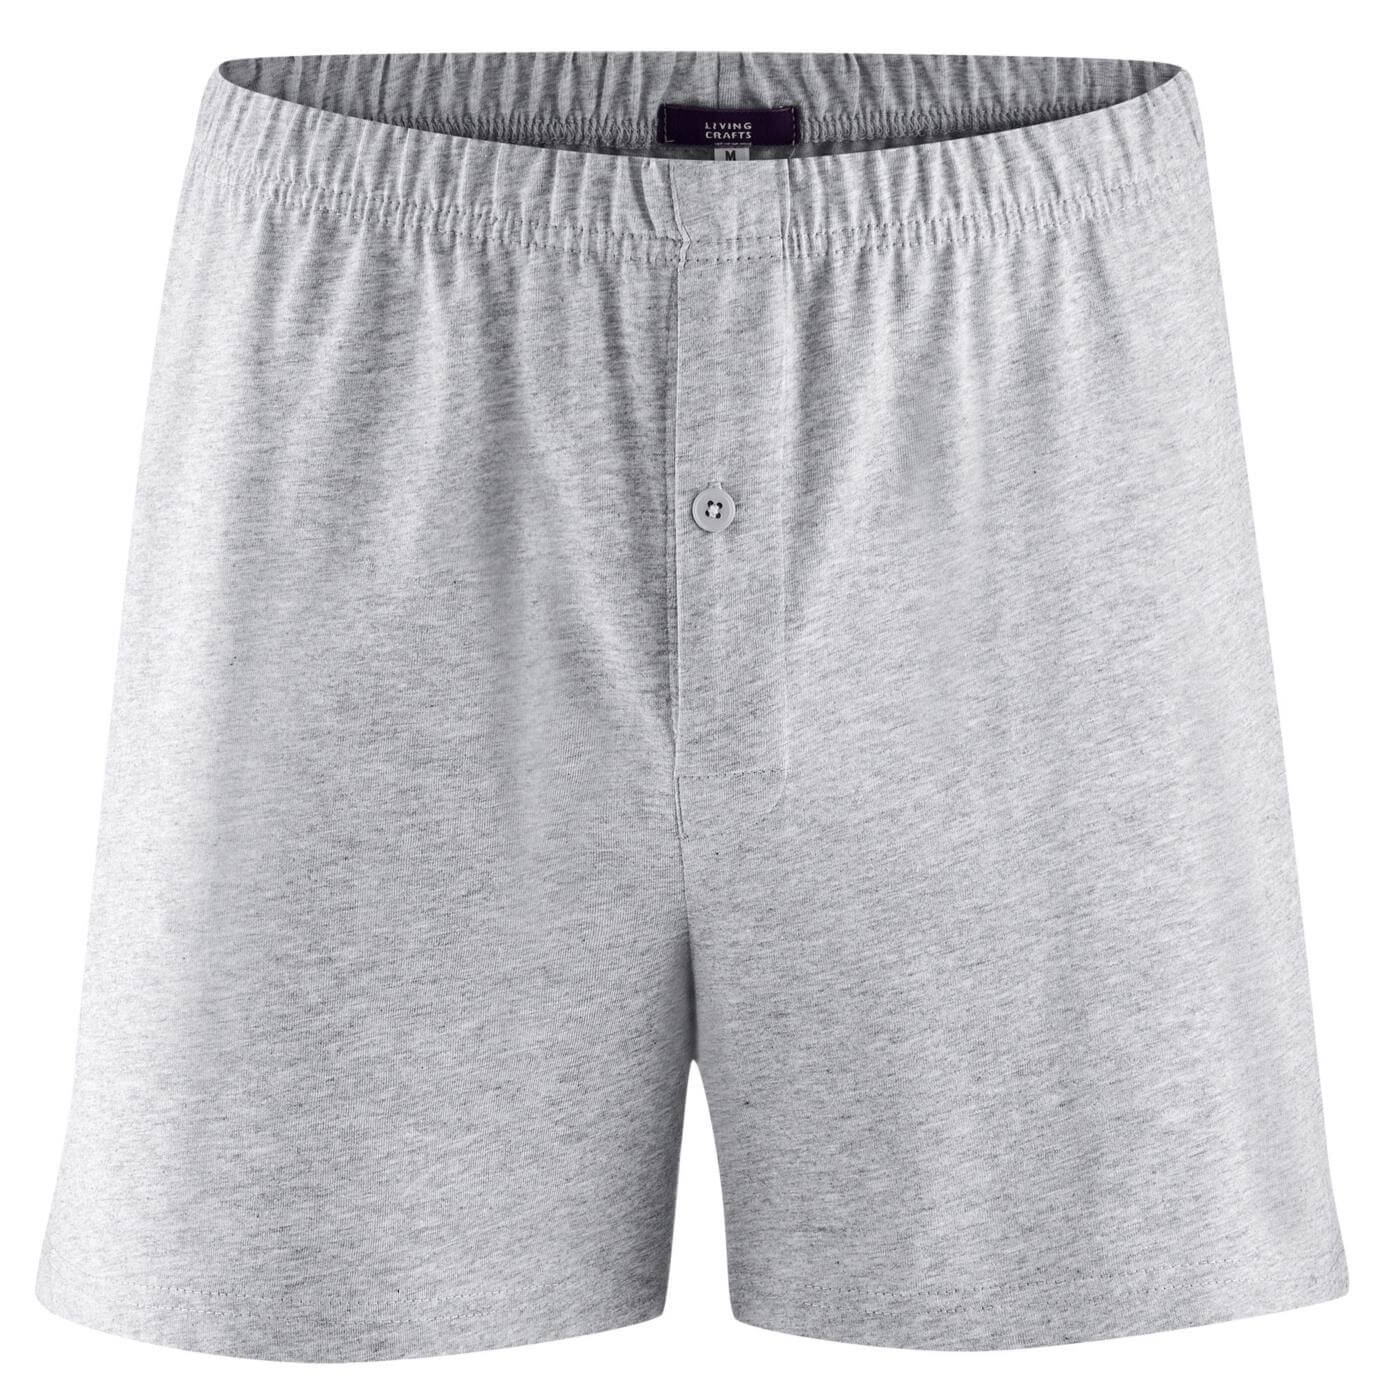 Living Crafts - Herren Boxer-Shorts